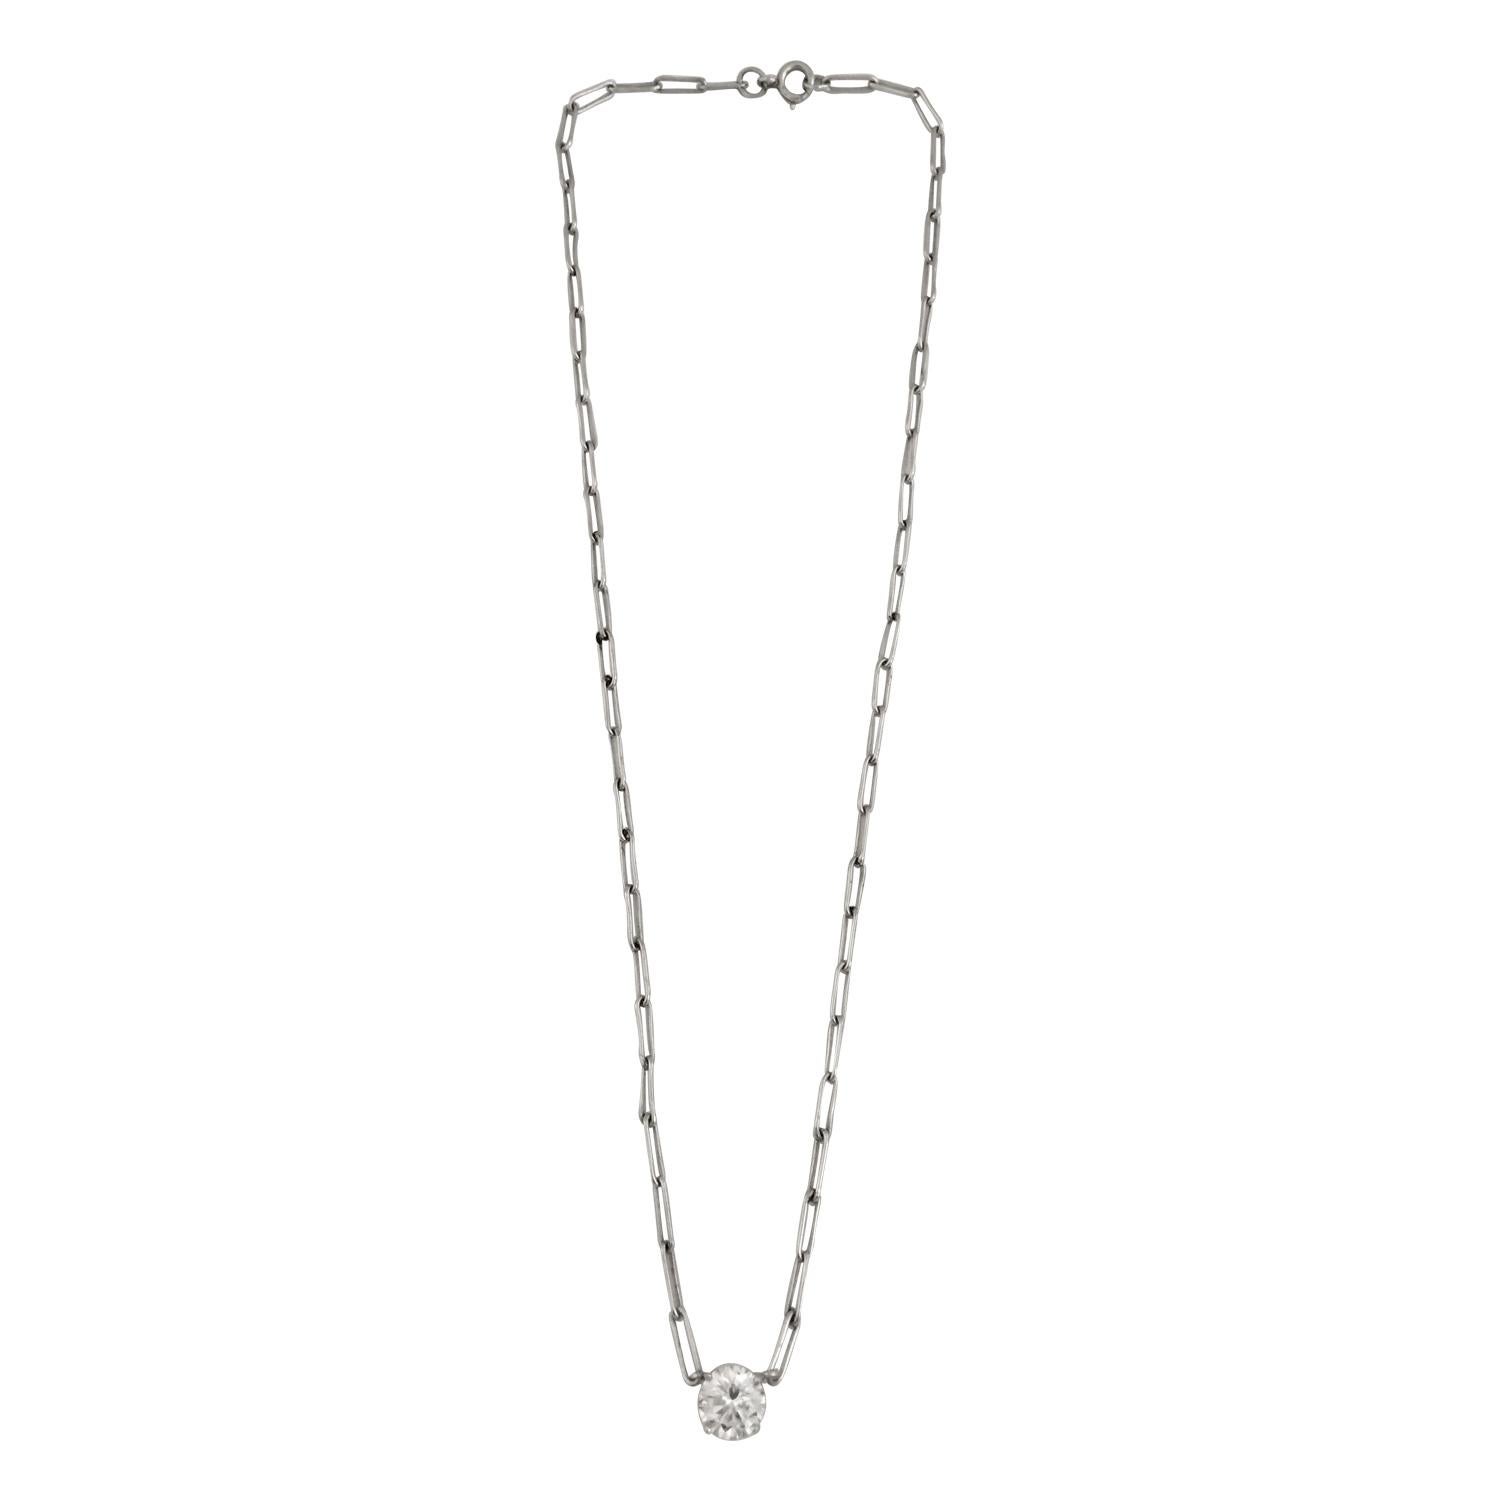 A 18 kt white gold necklace, (750/000) set with a 1.50 carat brilliant-cut diamond.
GIA certificate : E - VVS1
Length : 400 mm